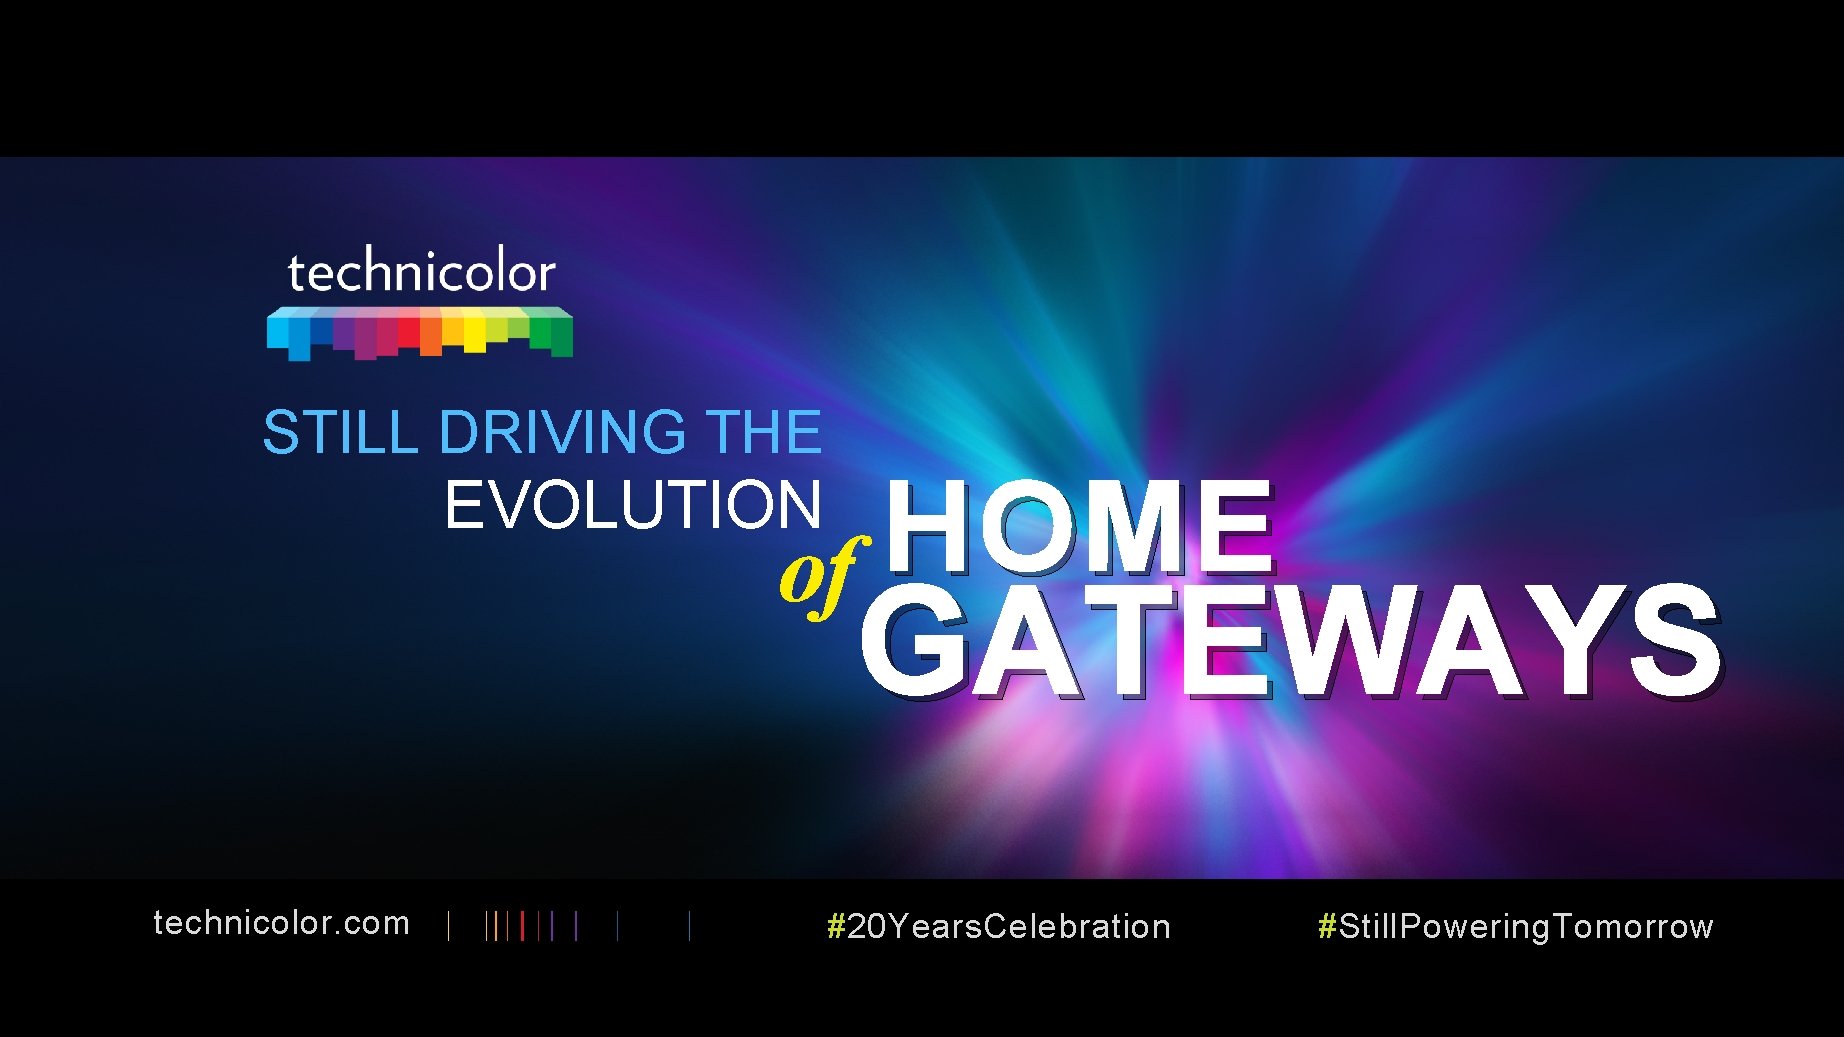 STILL DRIVING THE HOME of EVOLUTION GATEWAYS technicolor. com #20 Years. Celebration #Still. Powering.